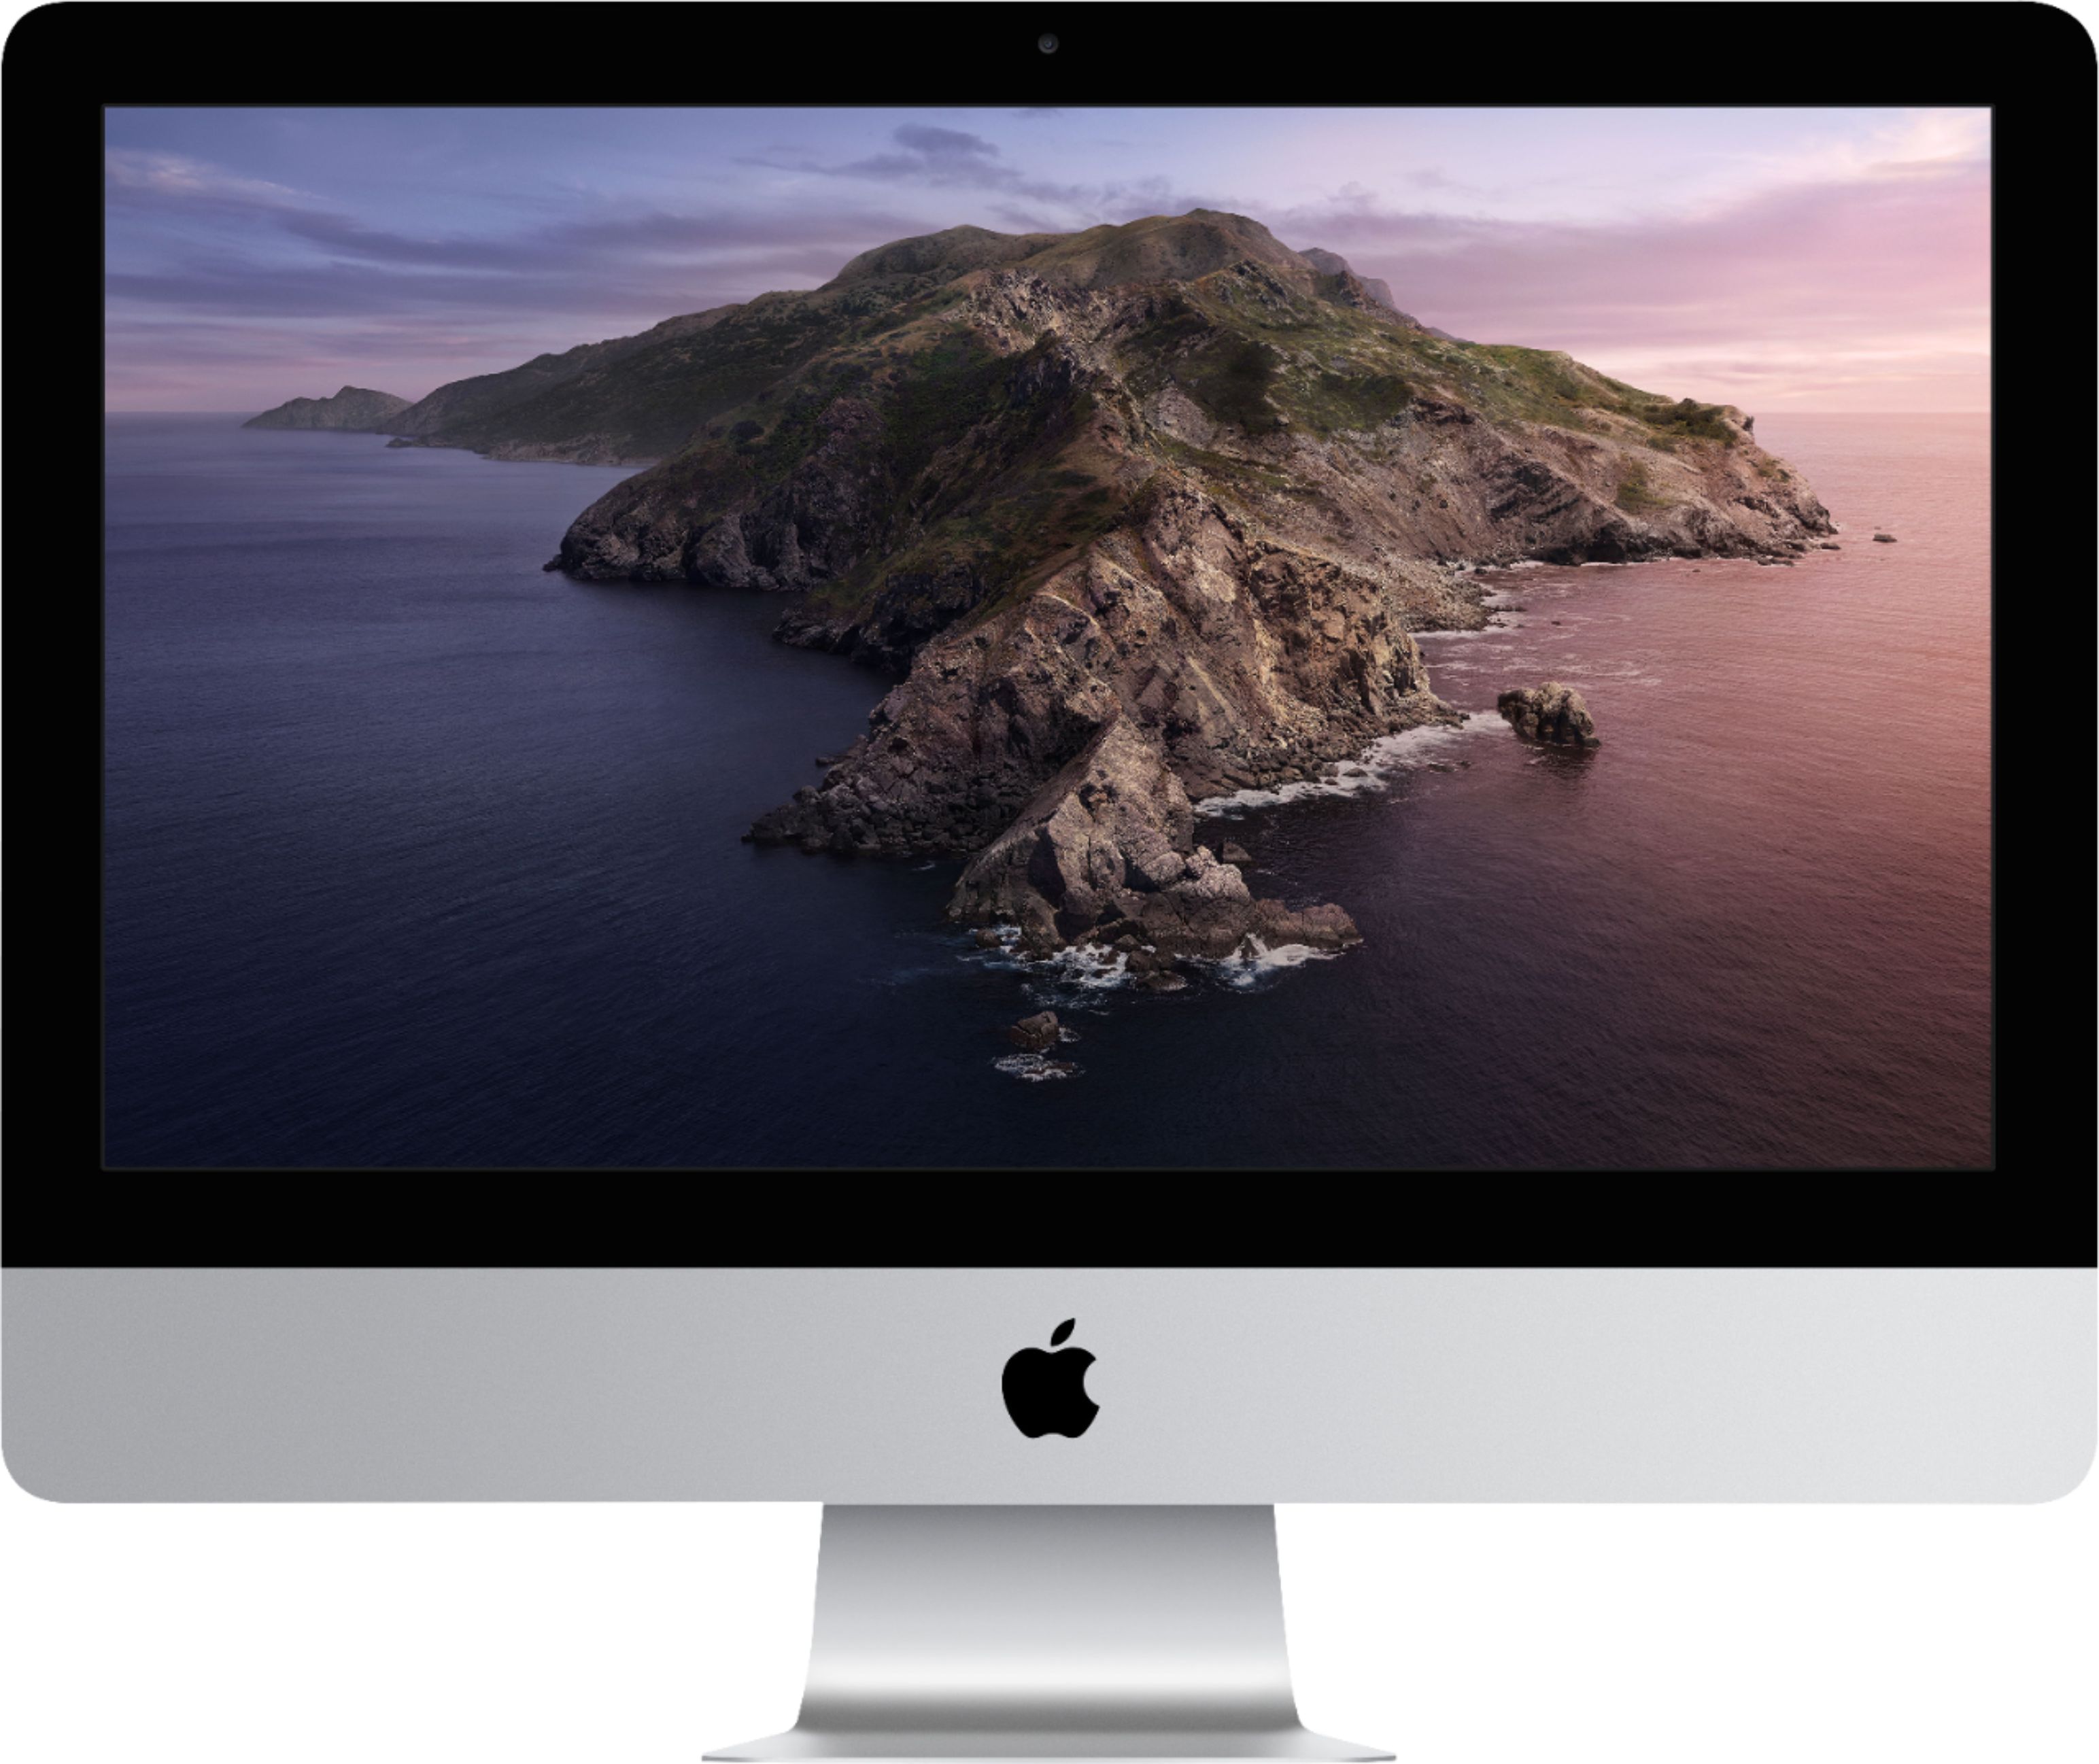 Apple - 21.5" iMac® with Retina 4K display (Latest Model) - Intel Core i5 (3.0GHz) - 8GB Memory - 1TB Fusion Drive - Silver